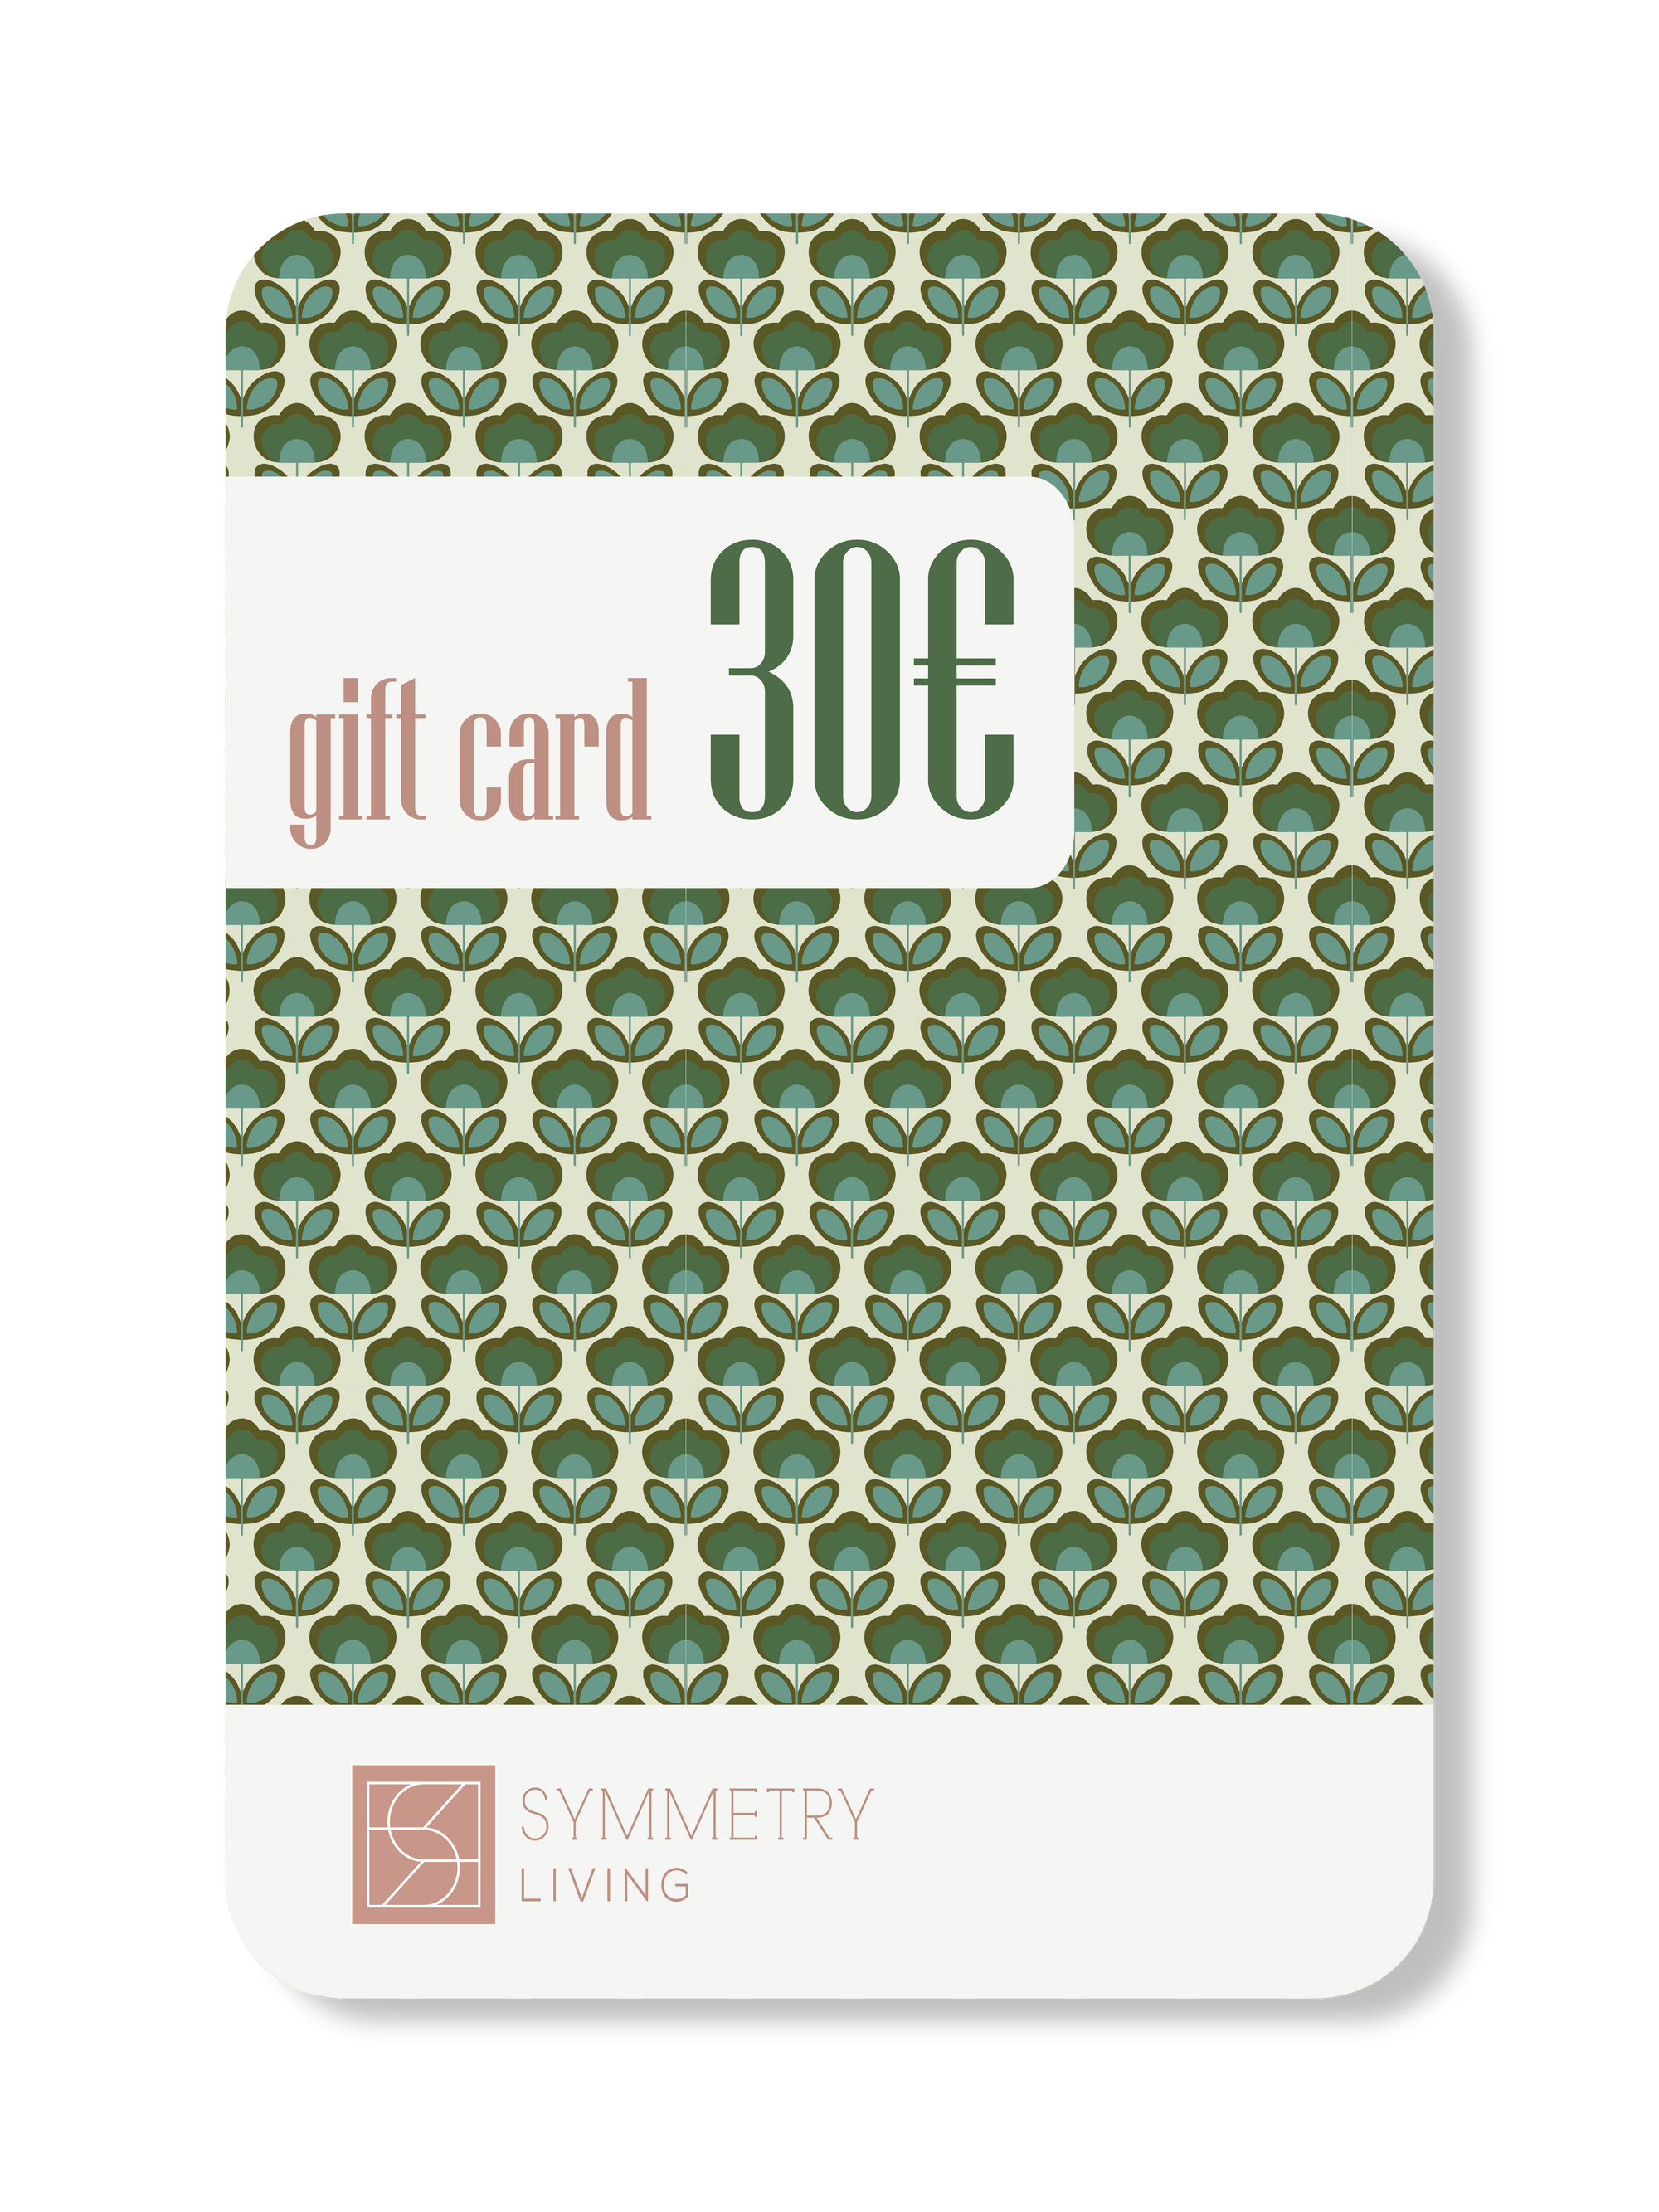 Symmetry Living | Gift Card